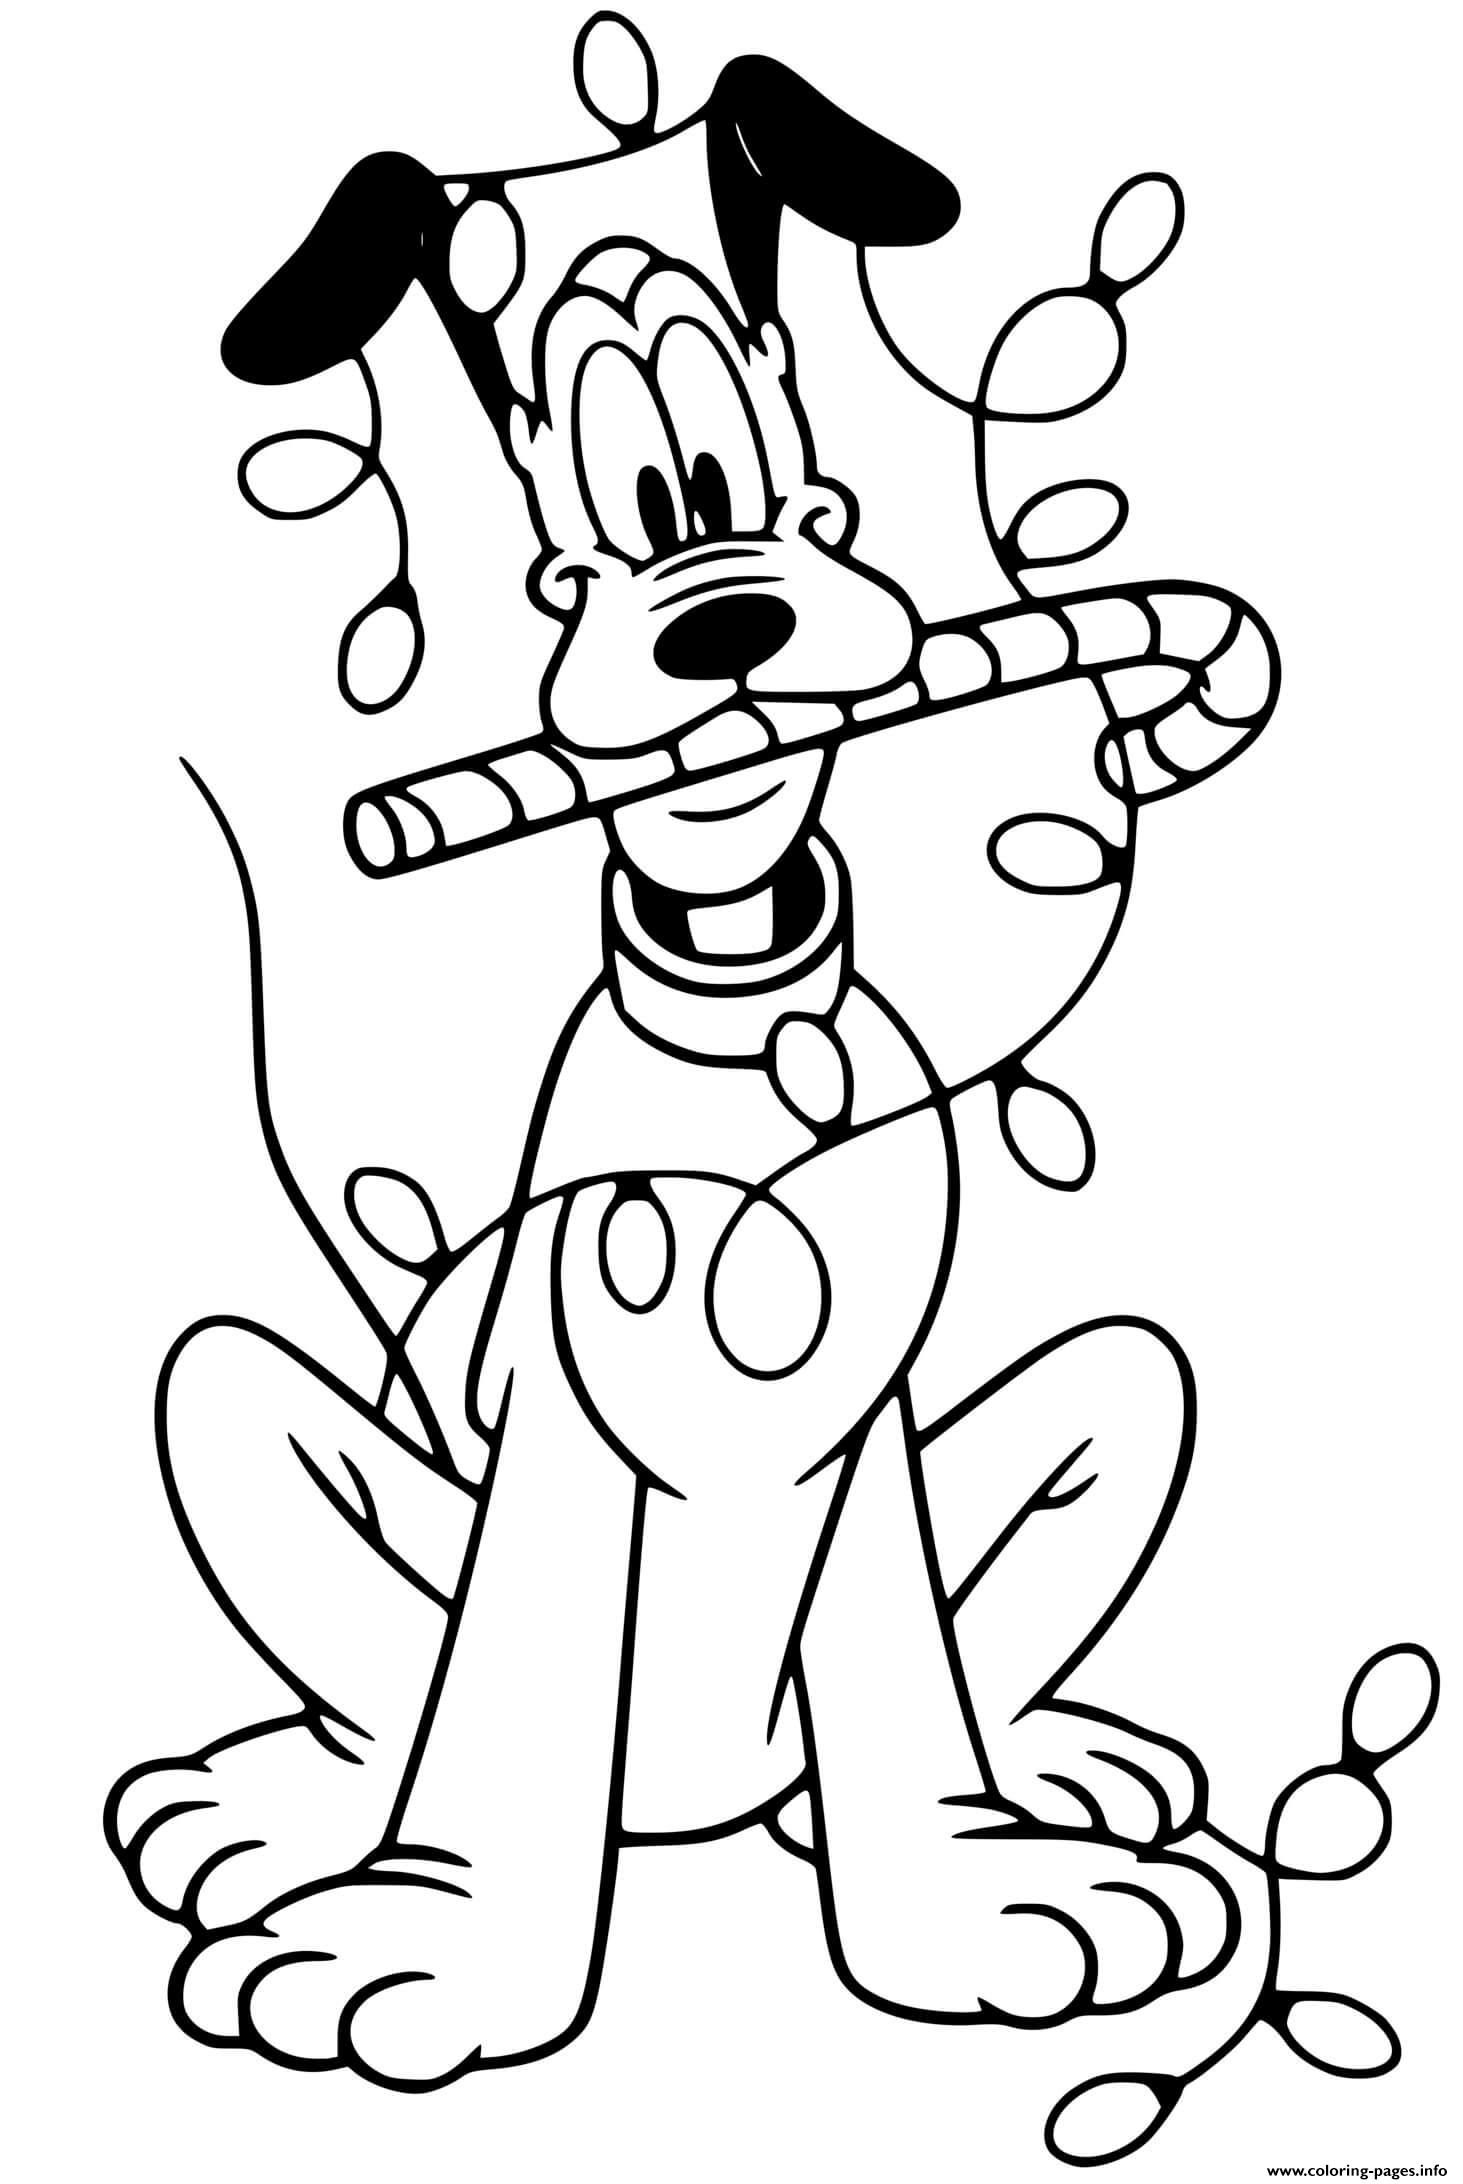 Pluto Compagnon Canin De Mickey Est Pret Pour Noel coloring